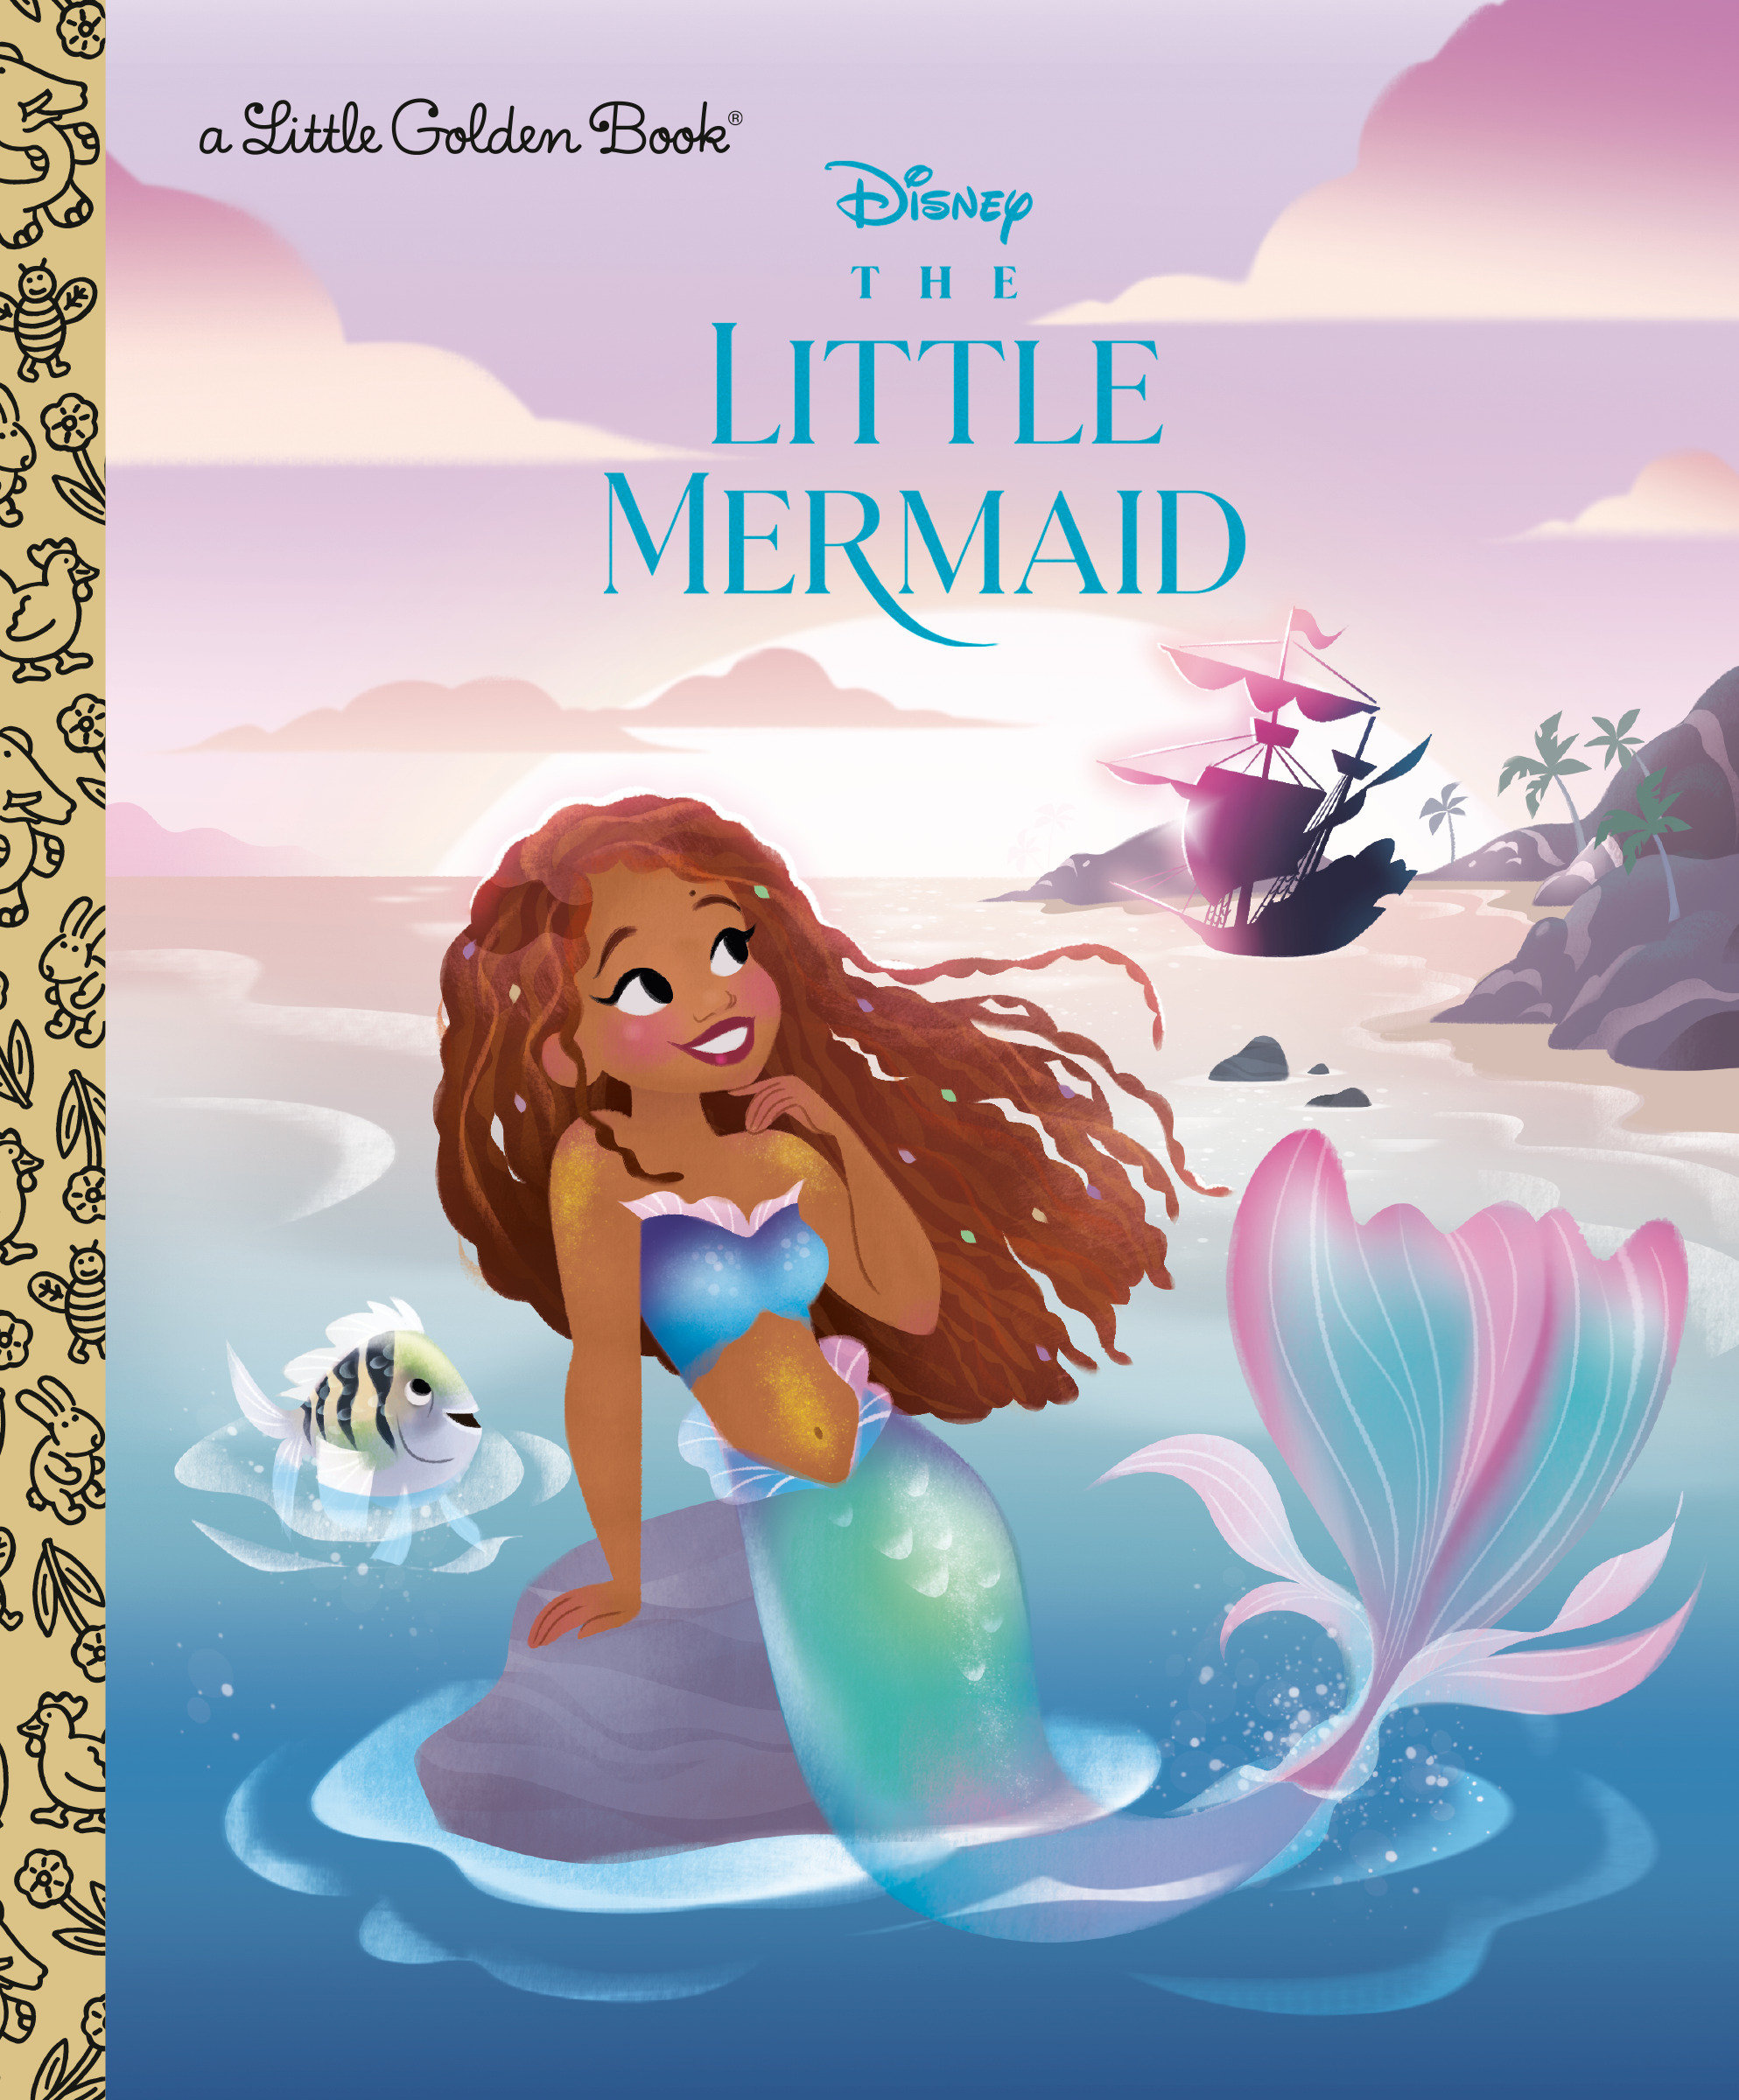 Little Mermaid Little Golden Book (Disney the Little Mermaid)